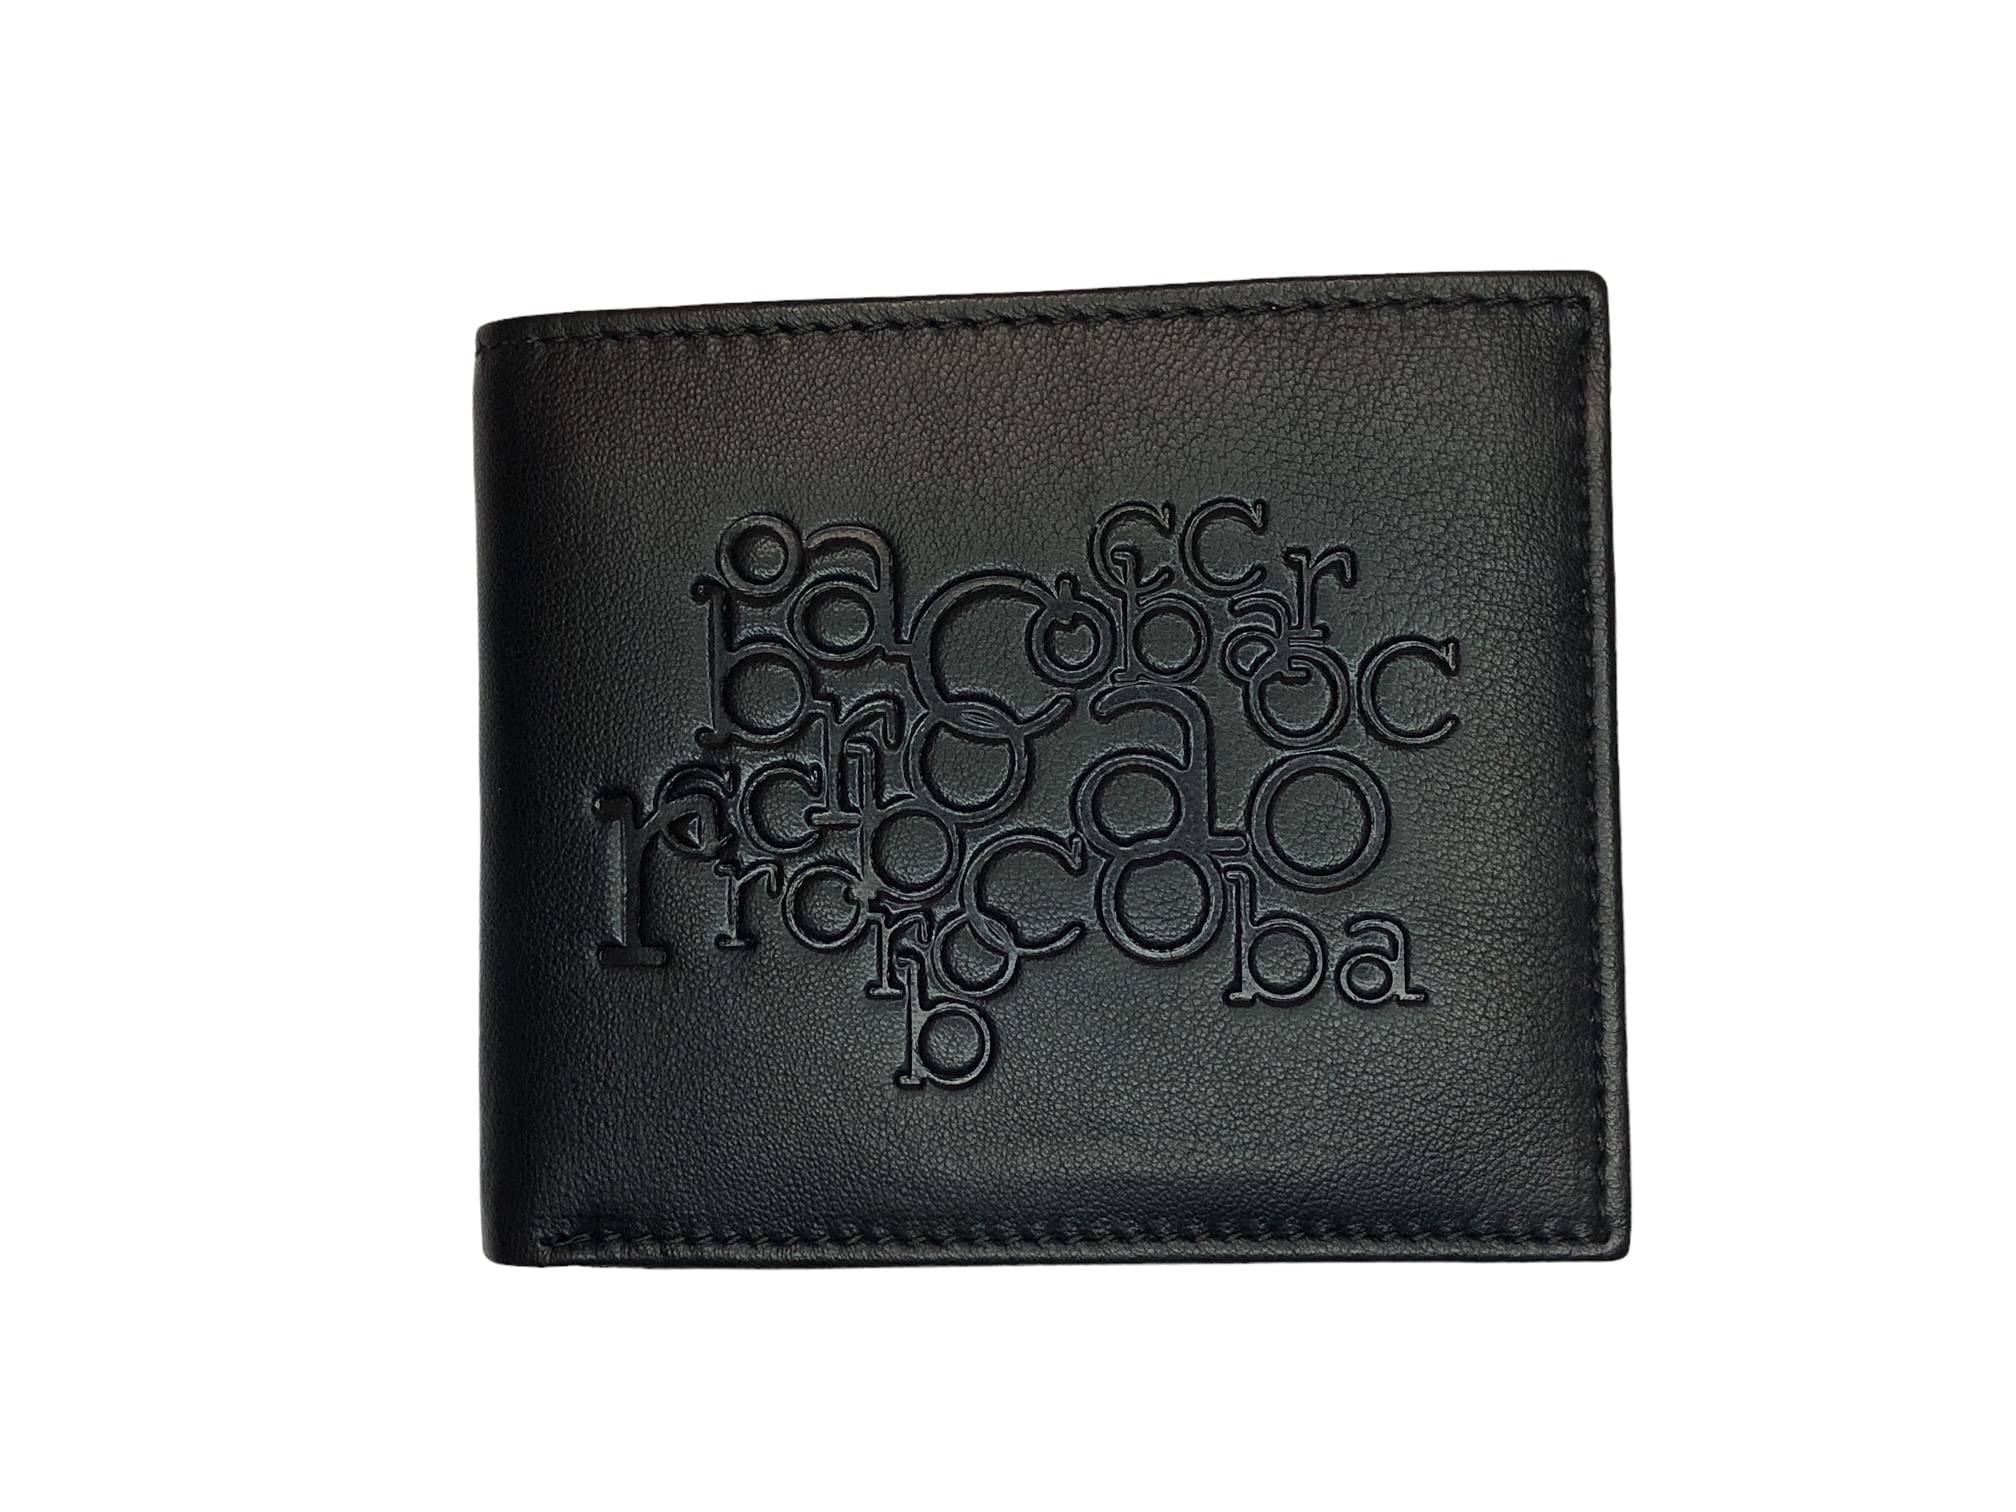 Geldbörse Herren Rocco Barock mit geprägtem Logo 100% Leder Farbe schwarz mit Geldbörse, Schwarz , L. 12 H 9,5 P. 1,5 cm, Klassisch